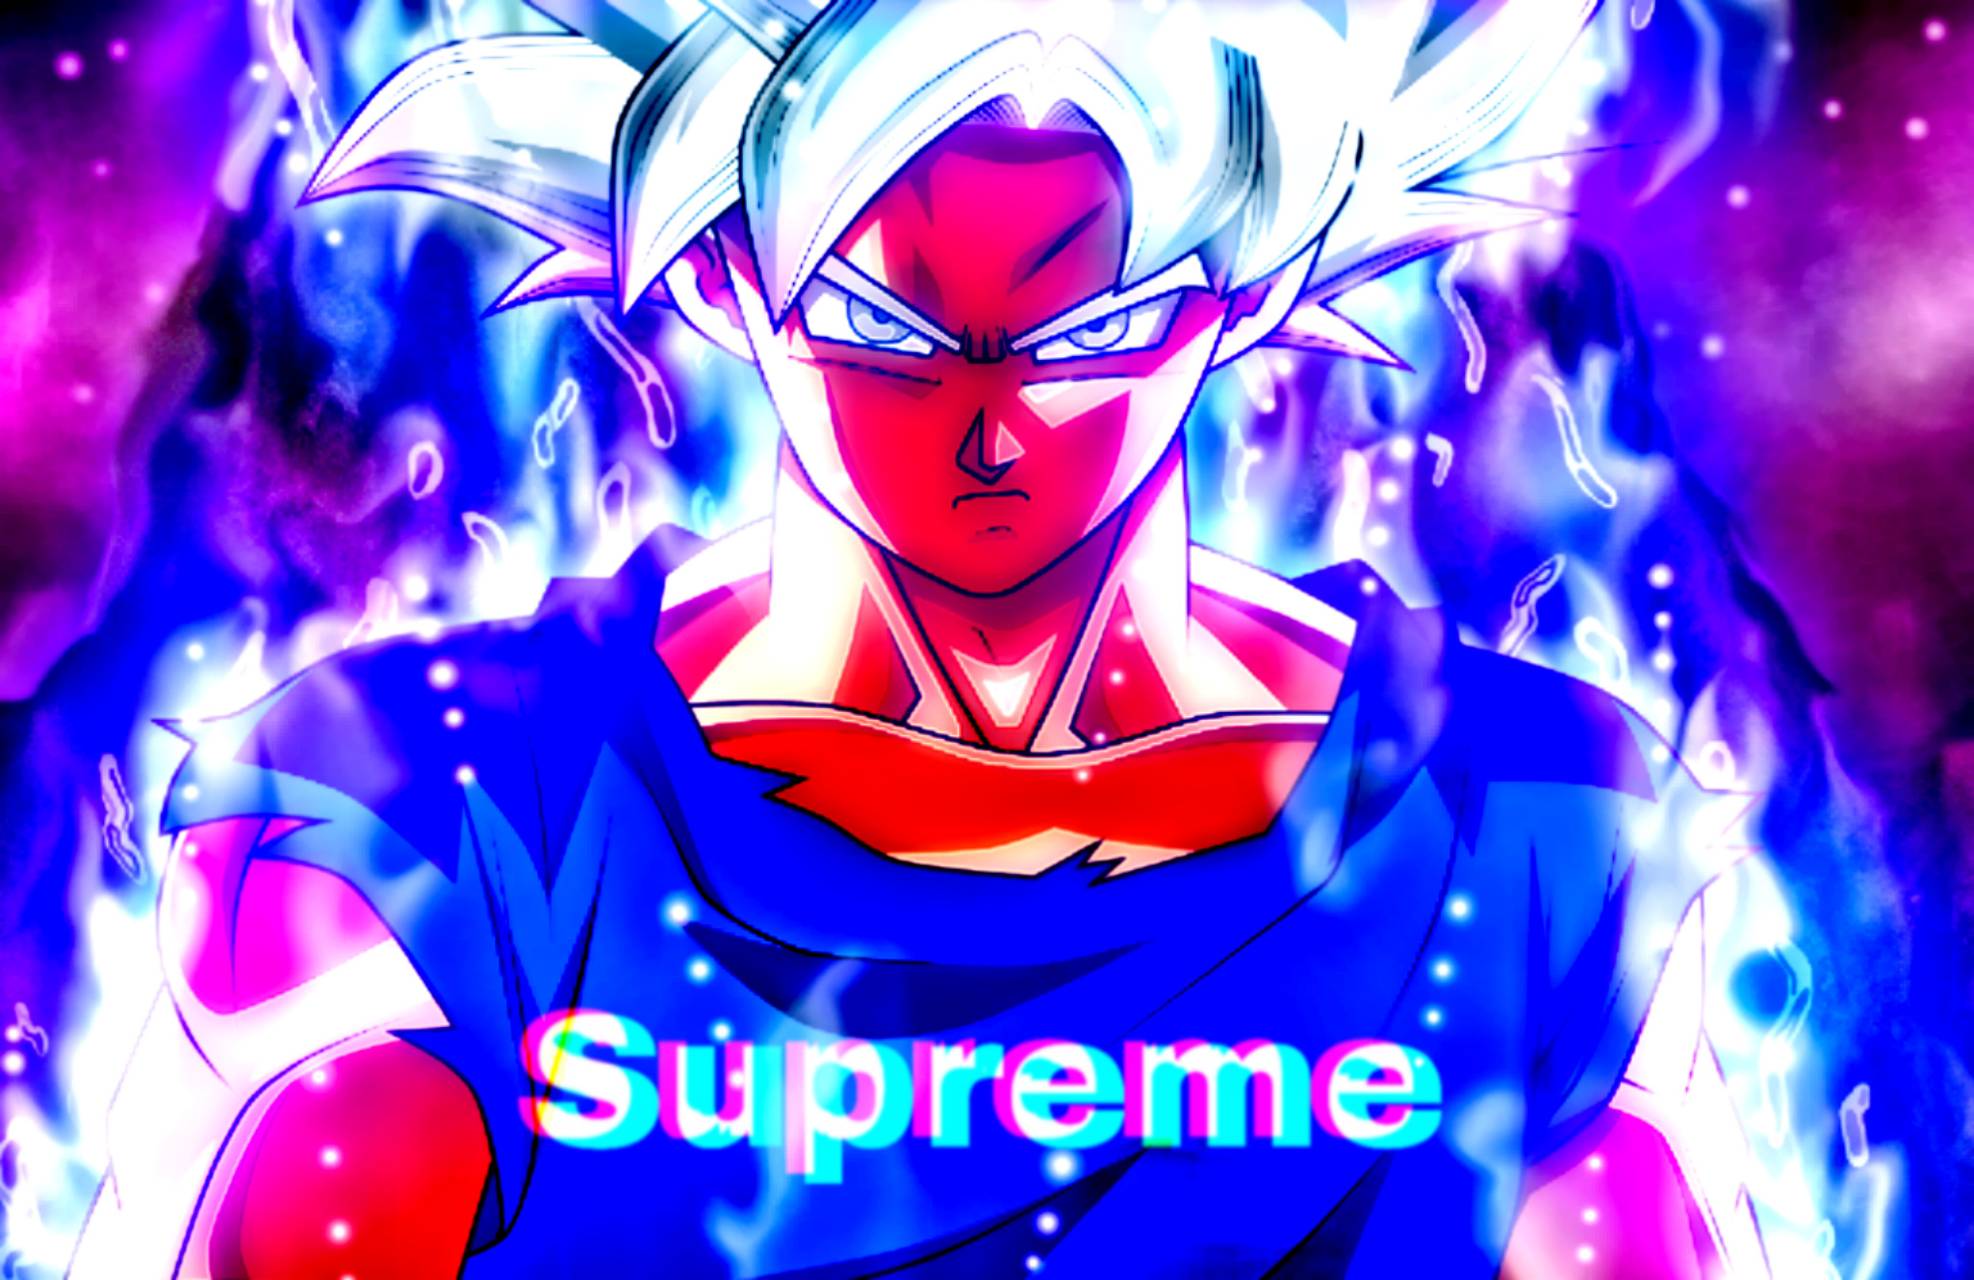 Goku Supreme Wallpapers Top Free Goku Supreme Backgro - vrogue.co